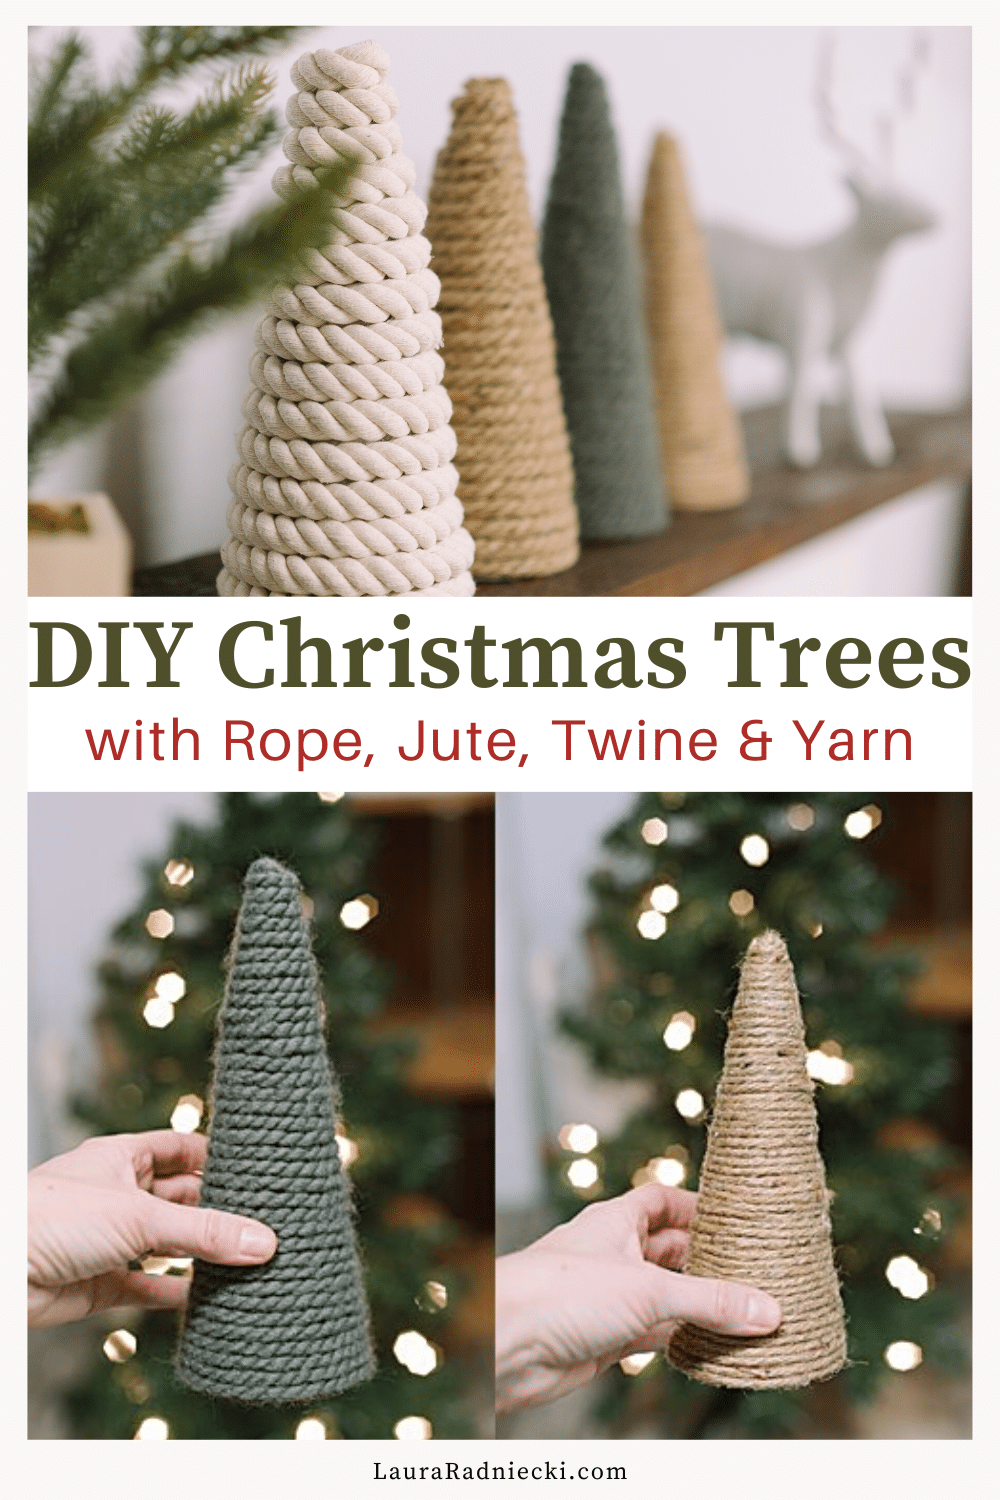 DIY Christmas Trees with Rope, Jute, Twine, and Yarn